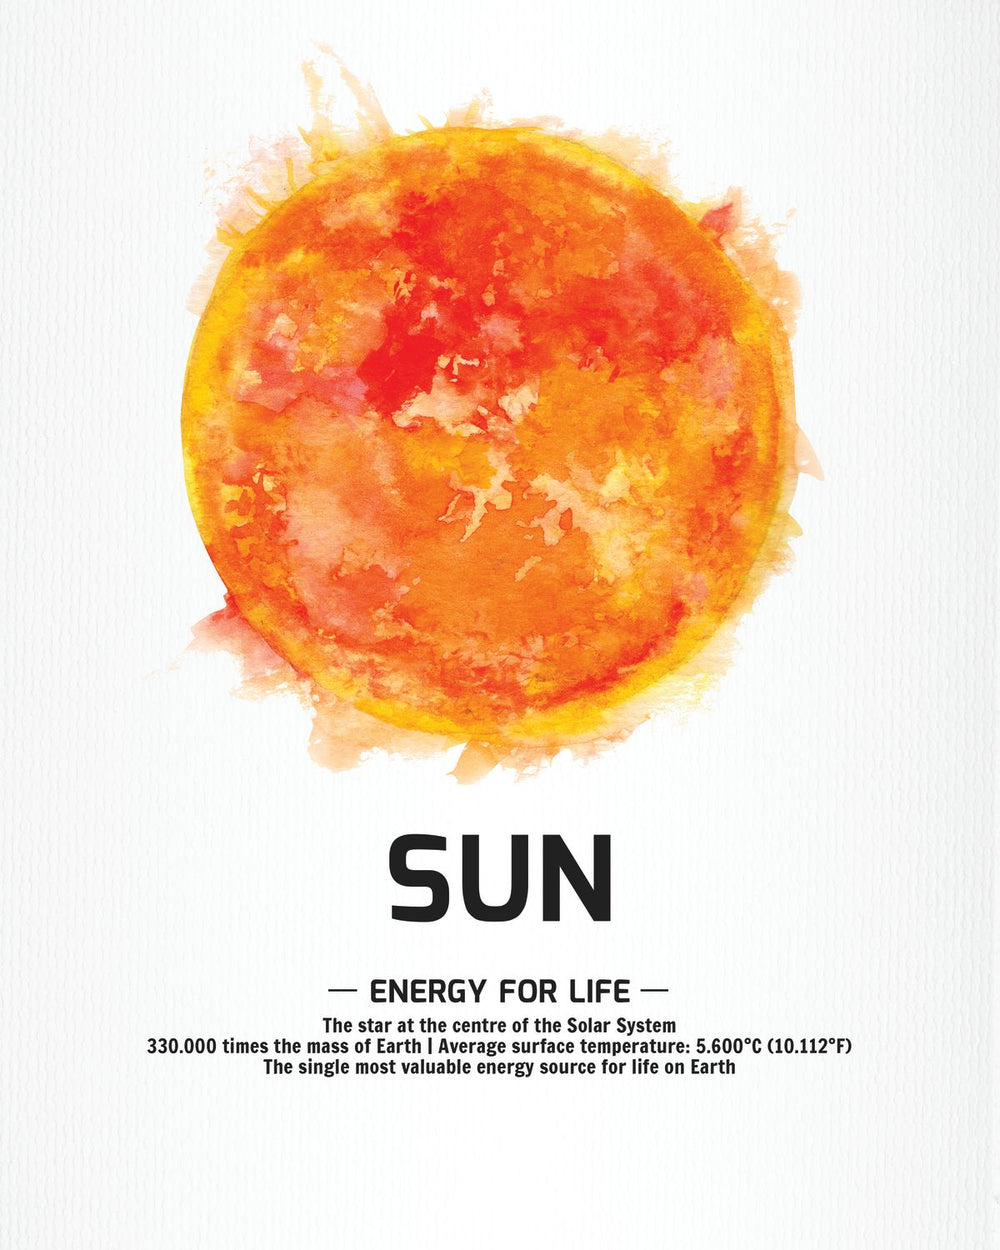 The Sun Description